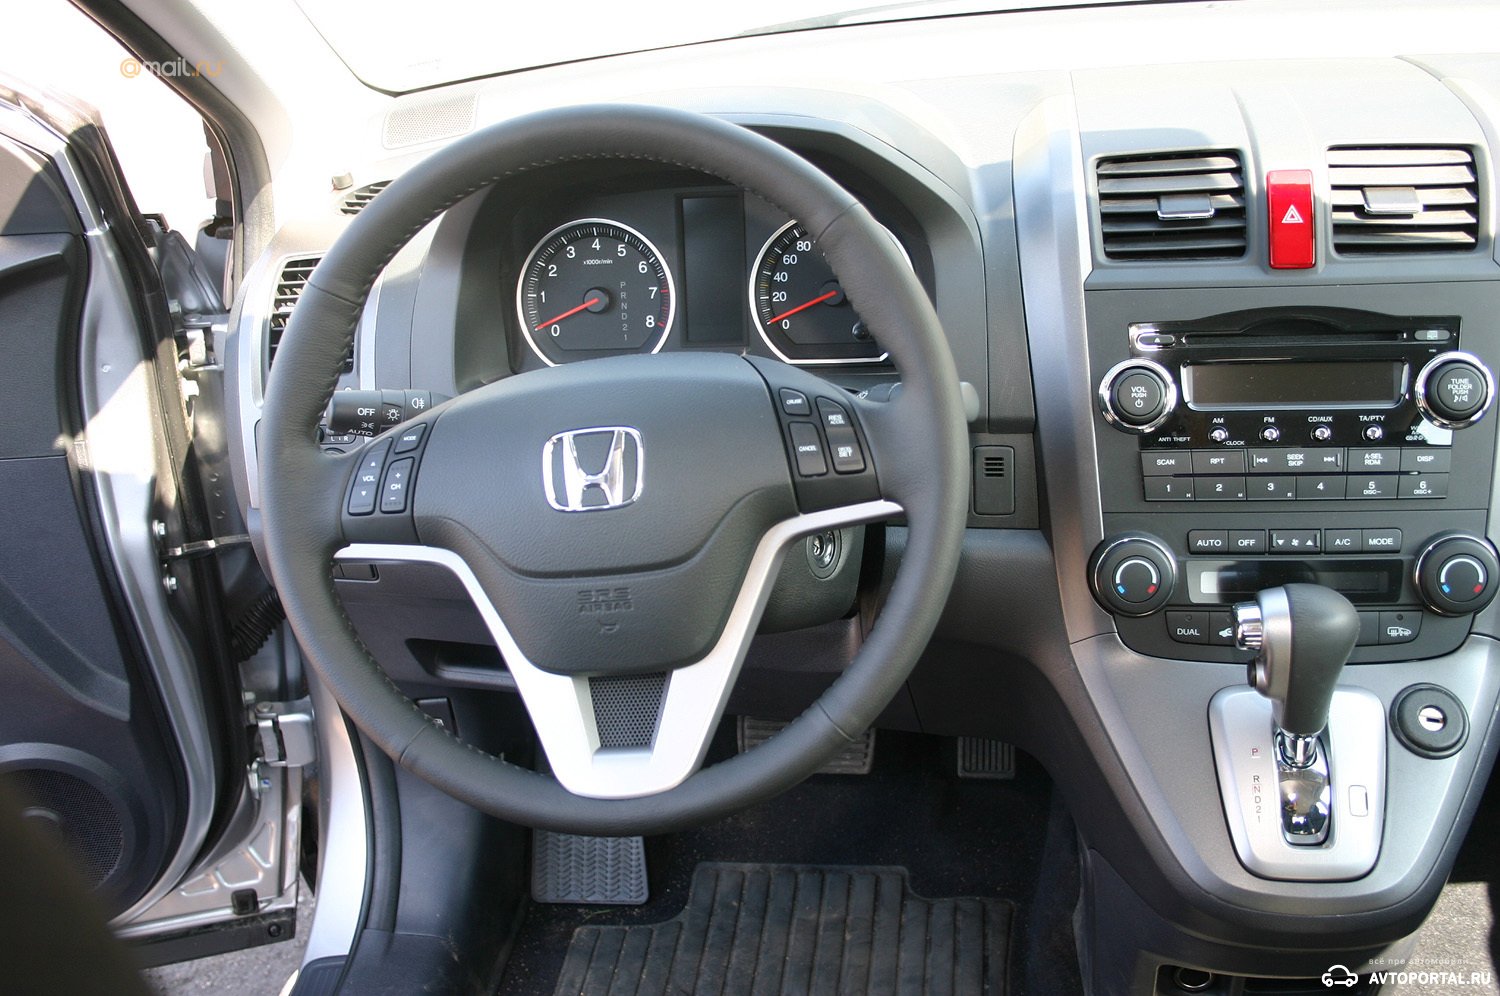 Honda v панель. Honda CR-V 2007 салон. Honda CRV 3 салон. Хонда СРВ 3 поколения. Торпеда Хонда СРВ 3.